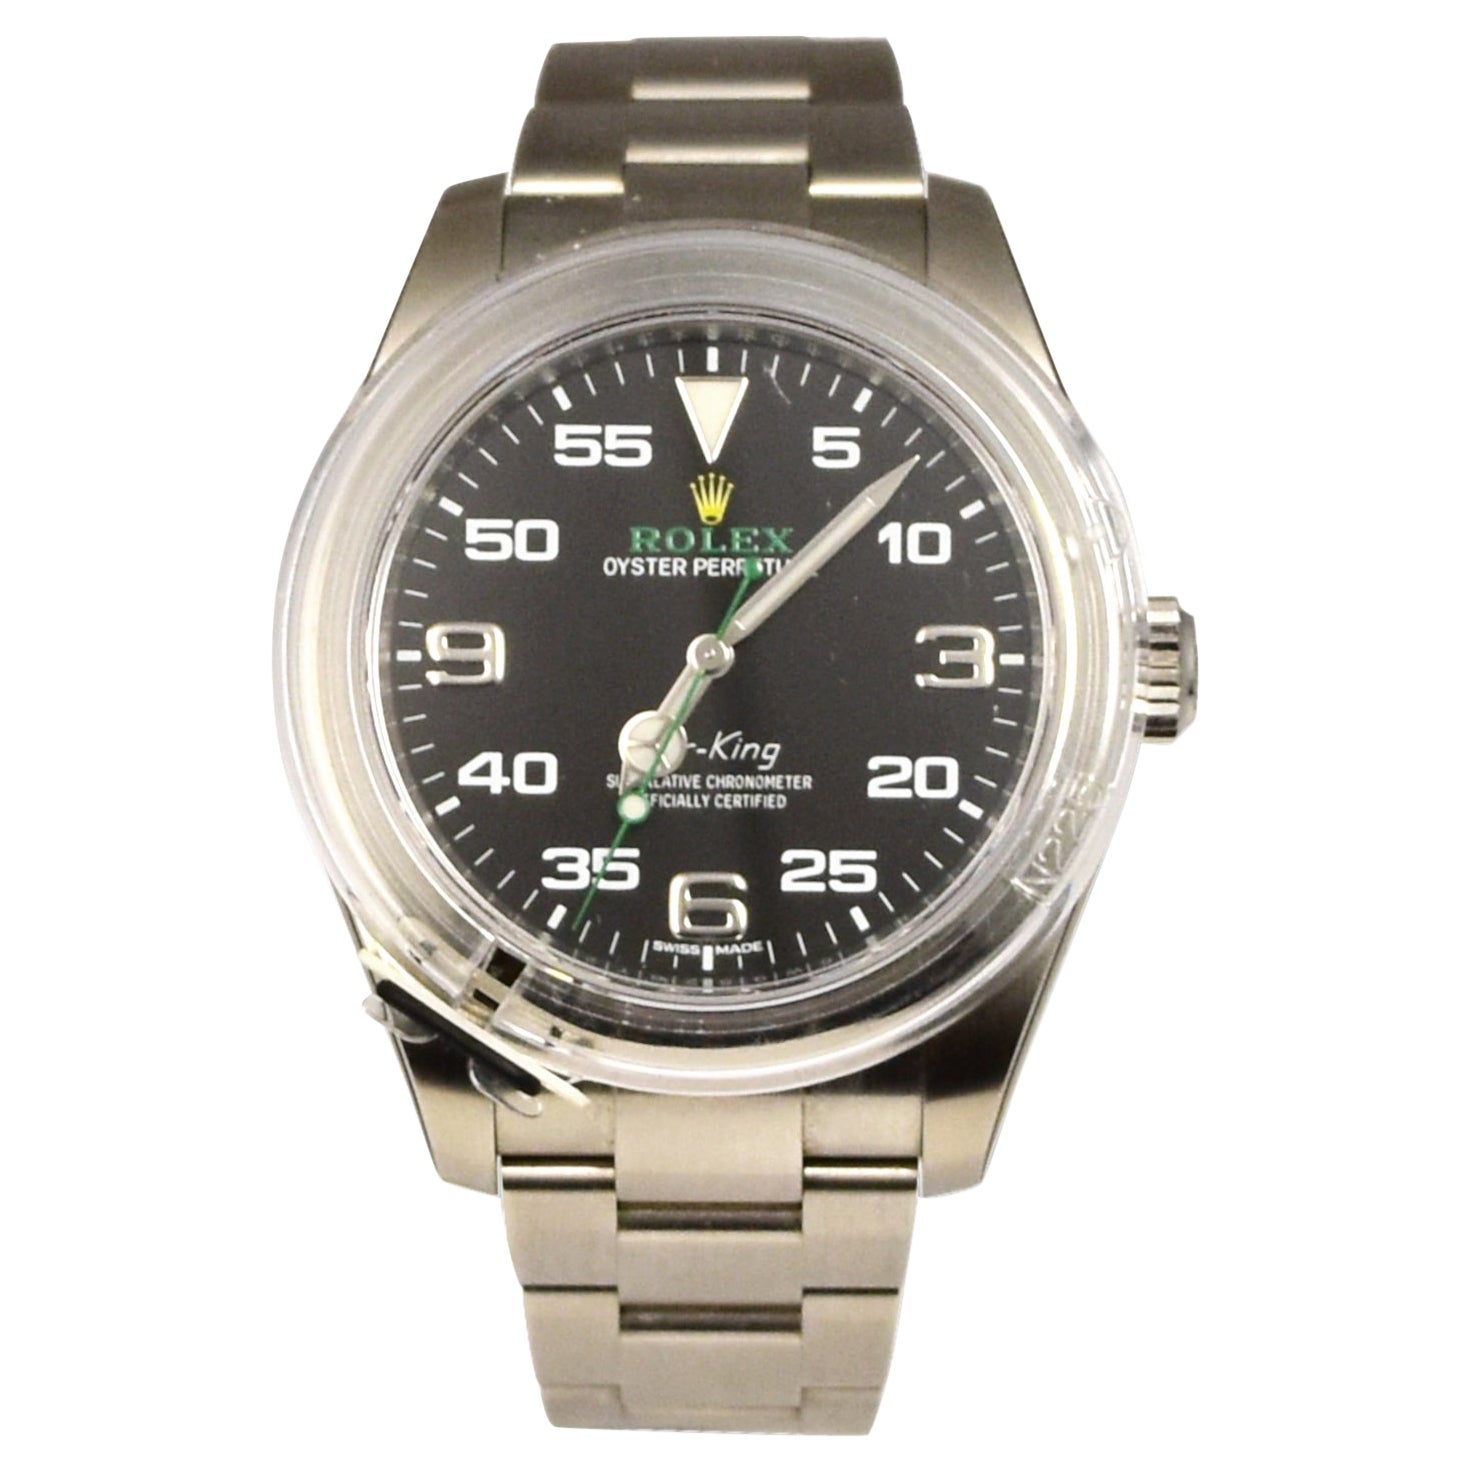 Rolex Airking Ref. 116900 in Black Dial Stainless Steel Watch